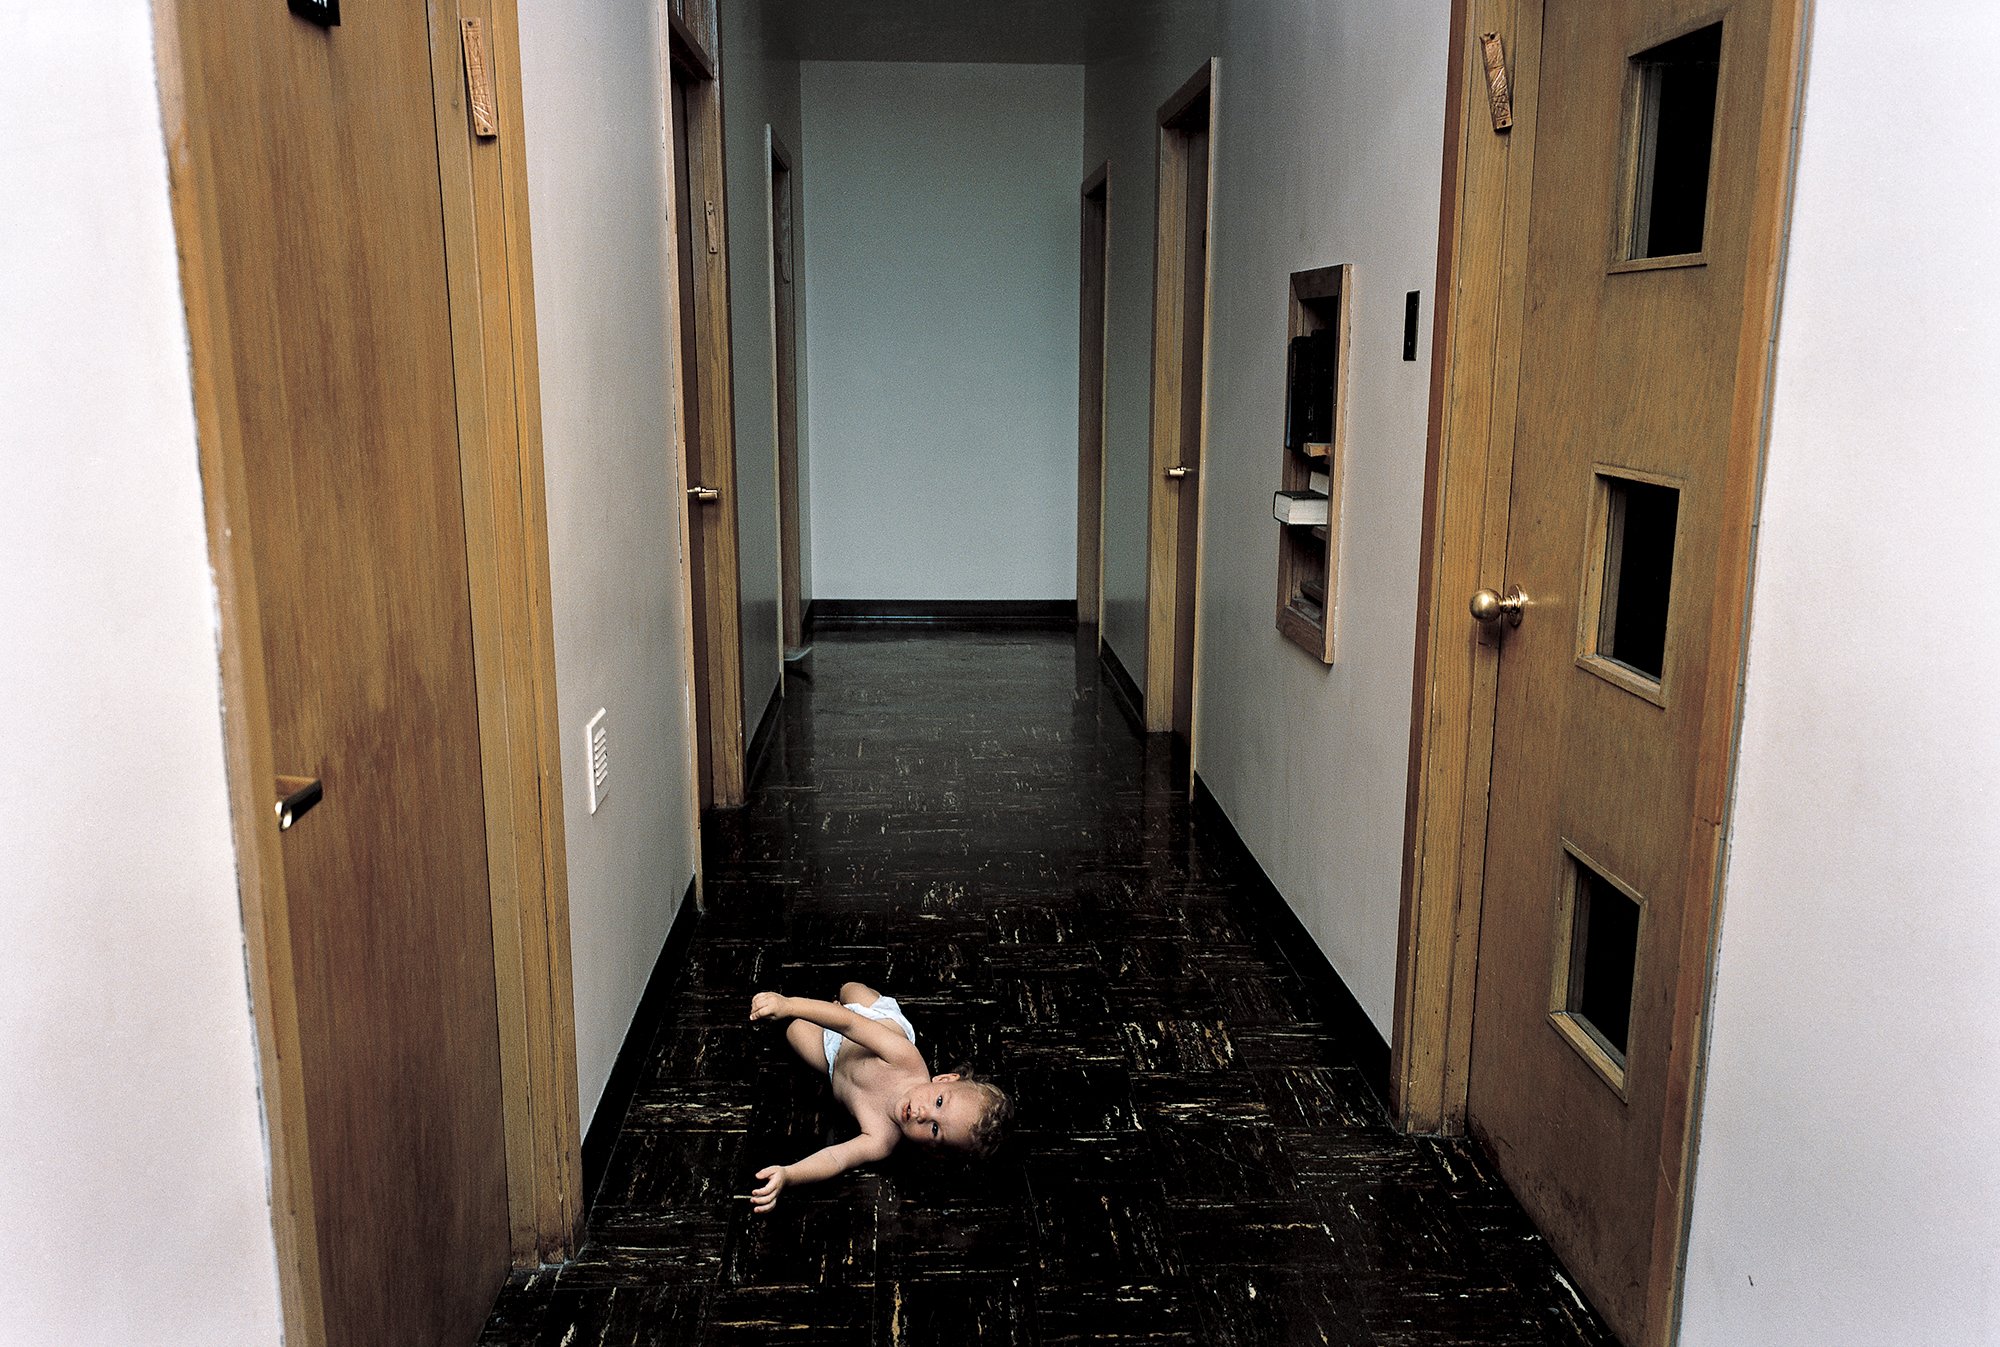  Baby in Hallway. 1994. 